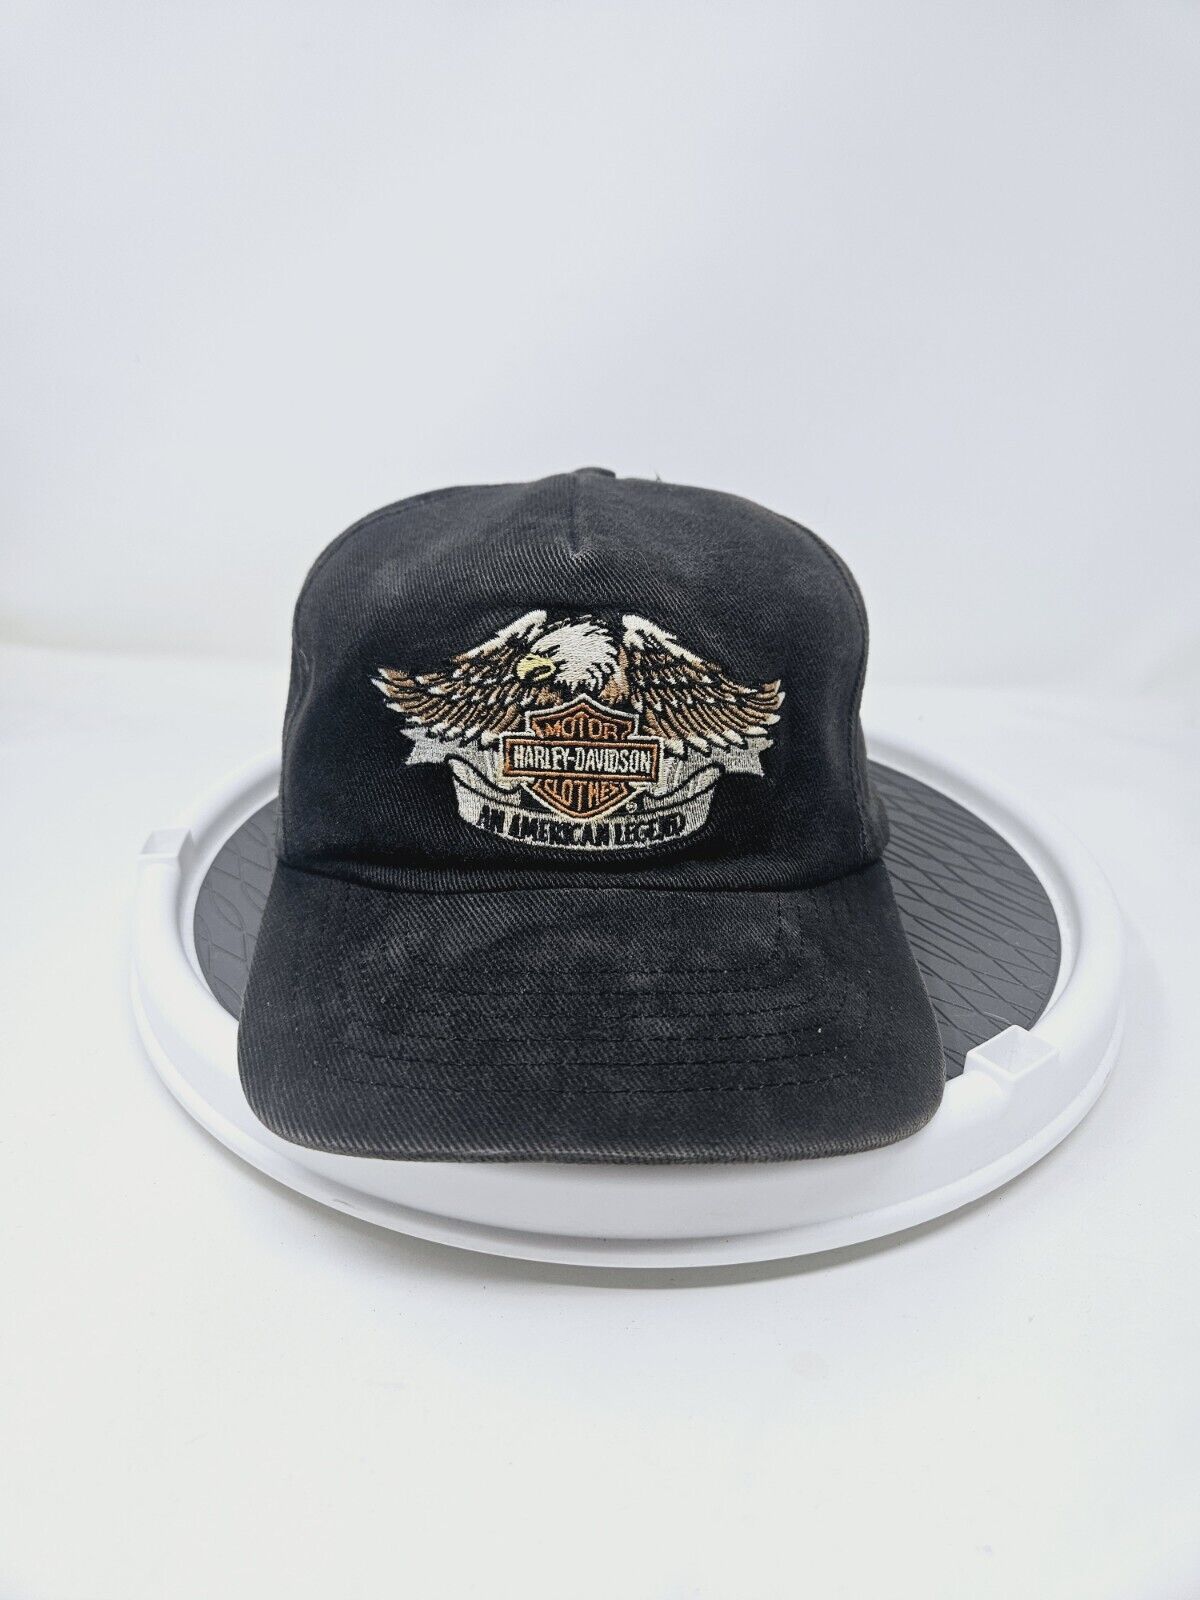 VTG Harley-Davidson Embroided Black Snapback Hat USA Made 90s Used Condition